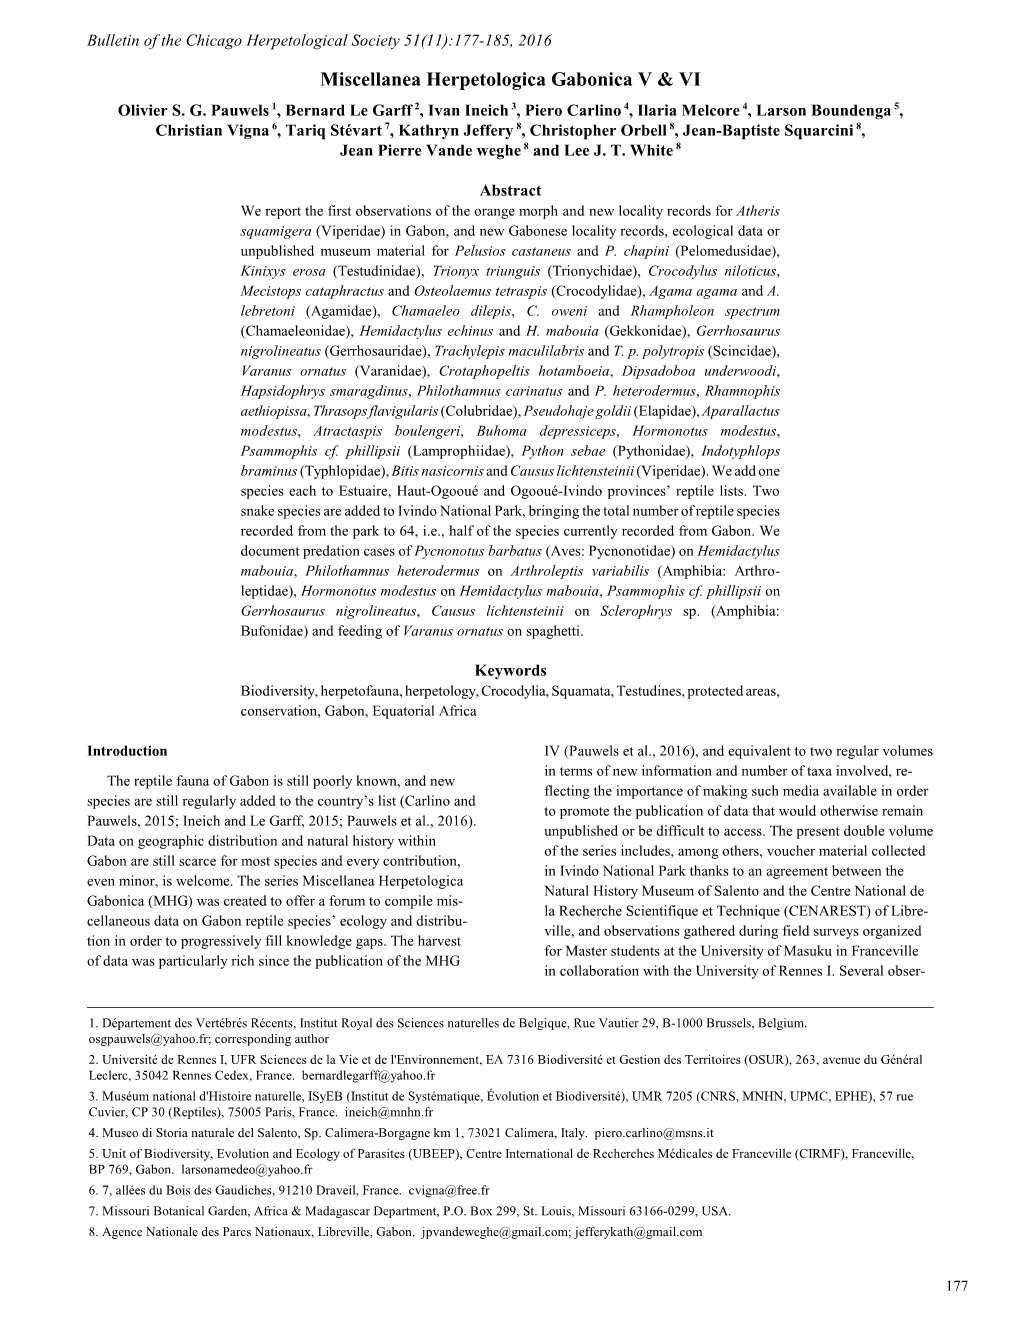 Miscellanea Herpetologica Gabonica V & VI. Bulletin Of